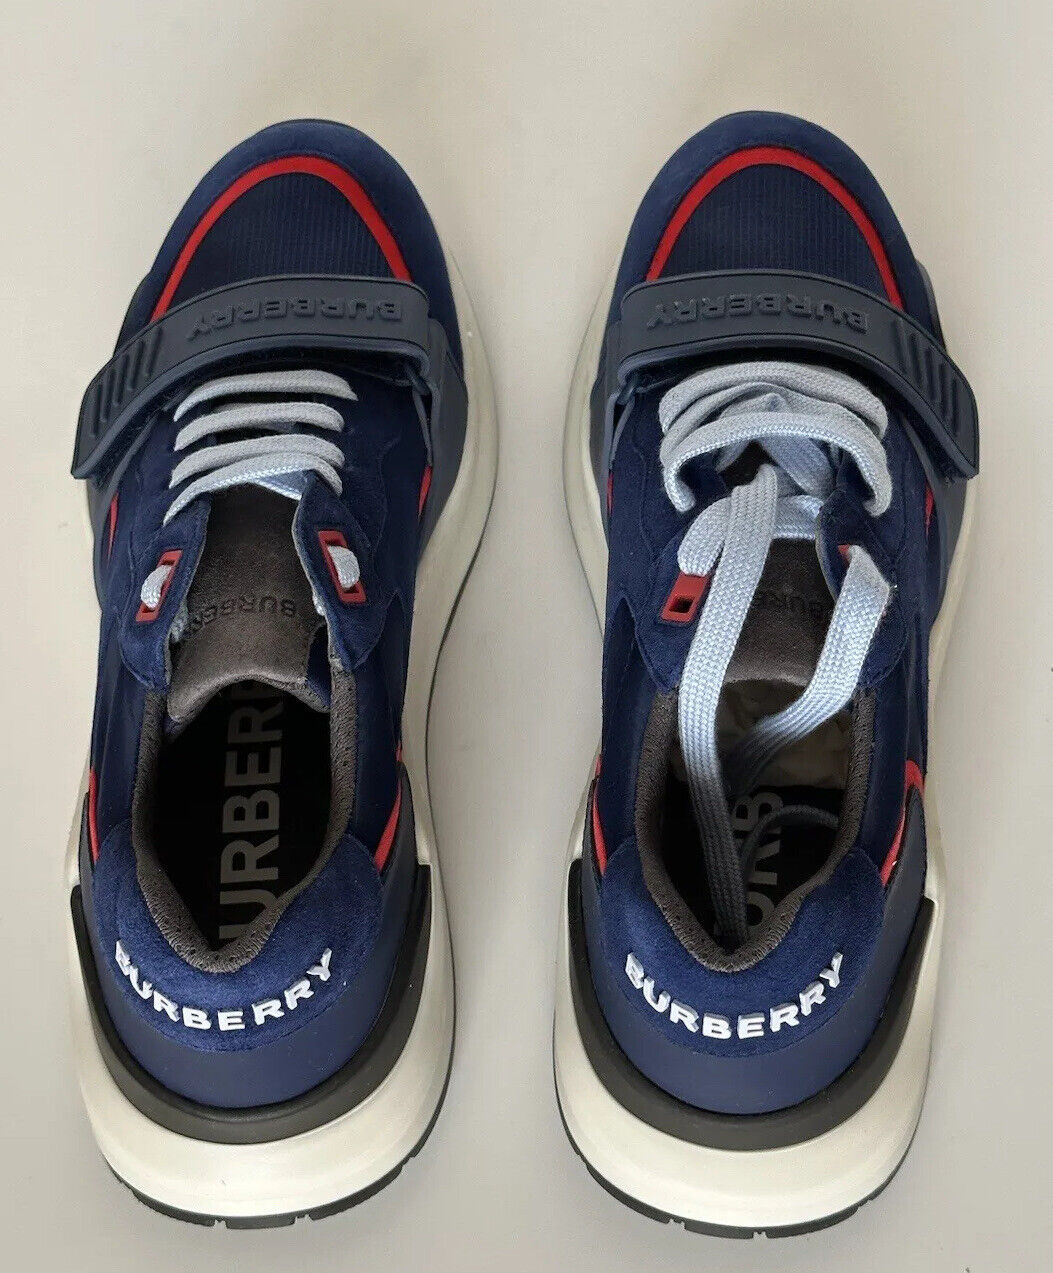 NIB Burberry Ramsey Men's Oceanic Blue Sneakers 11 US (44 Eu) 8045534 Italy